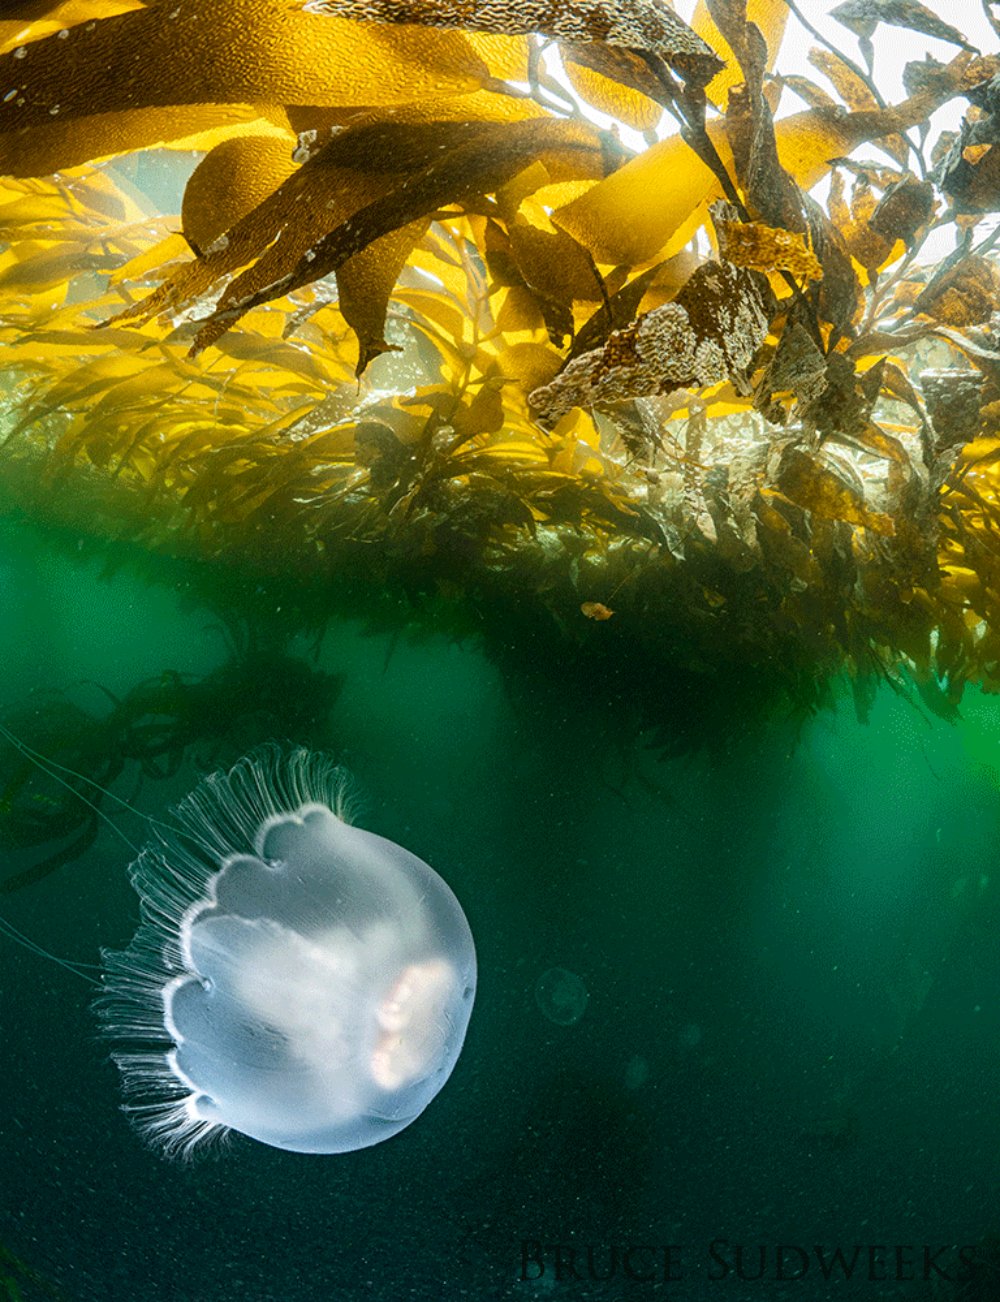 Moon Jellyfish swimming below kelp.